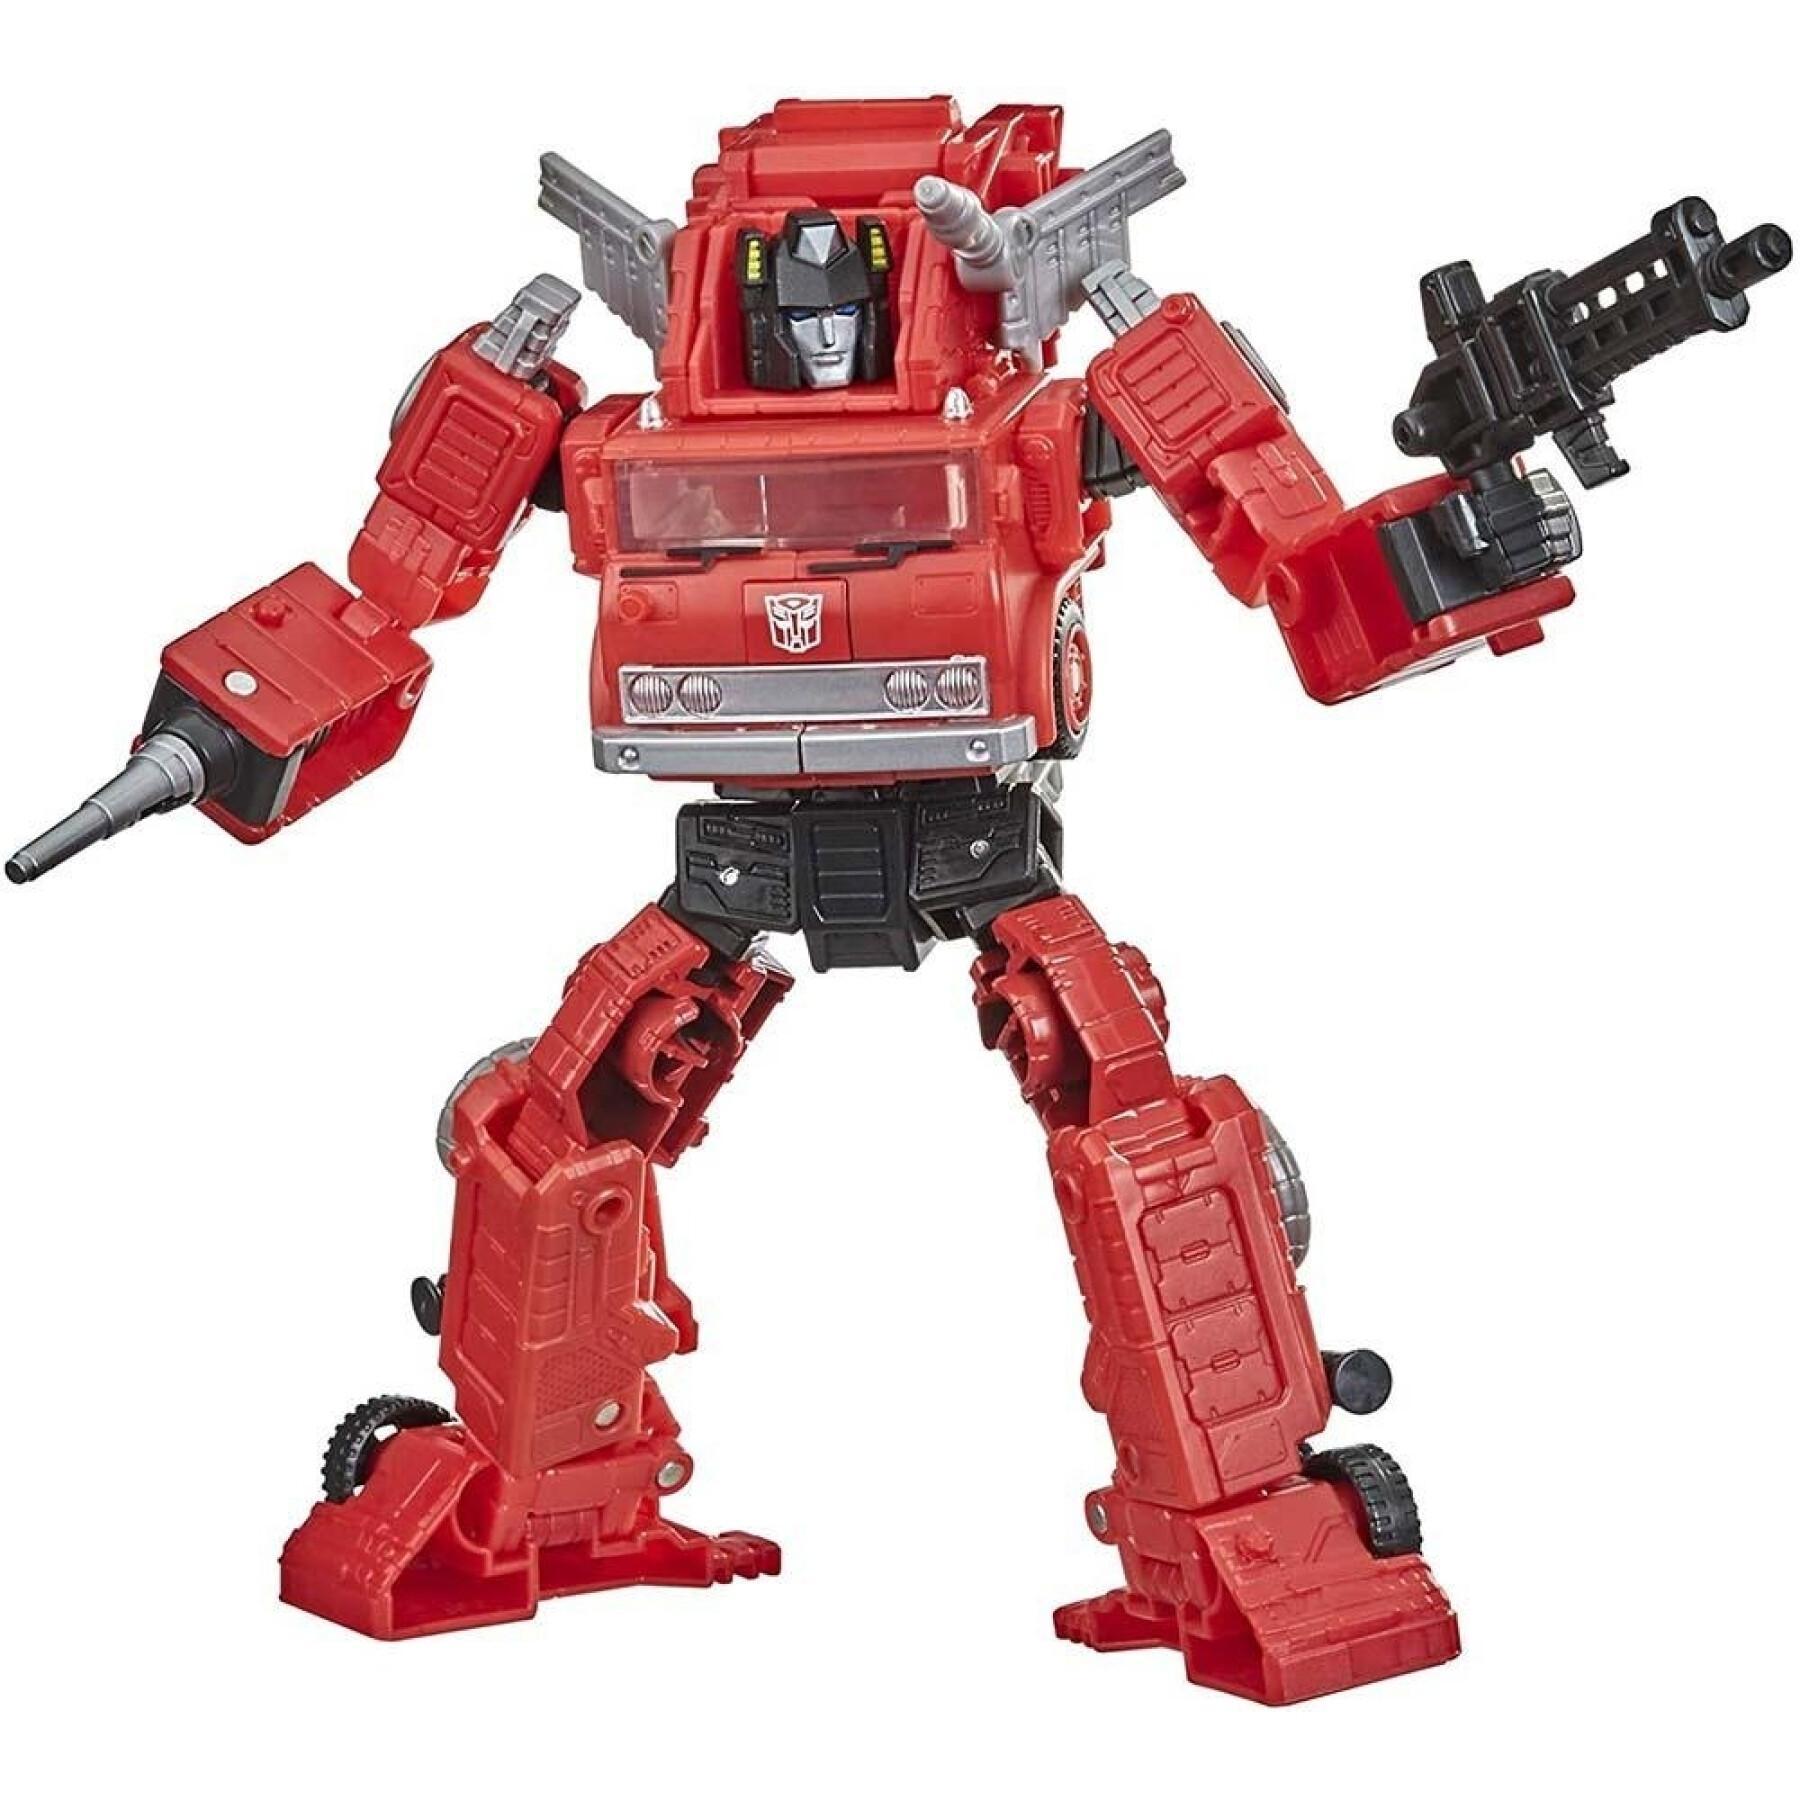 Figurina Hasbro Transformers Generation WFC Voyager